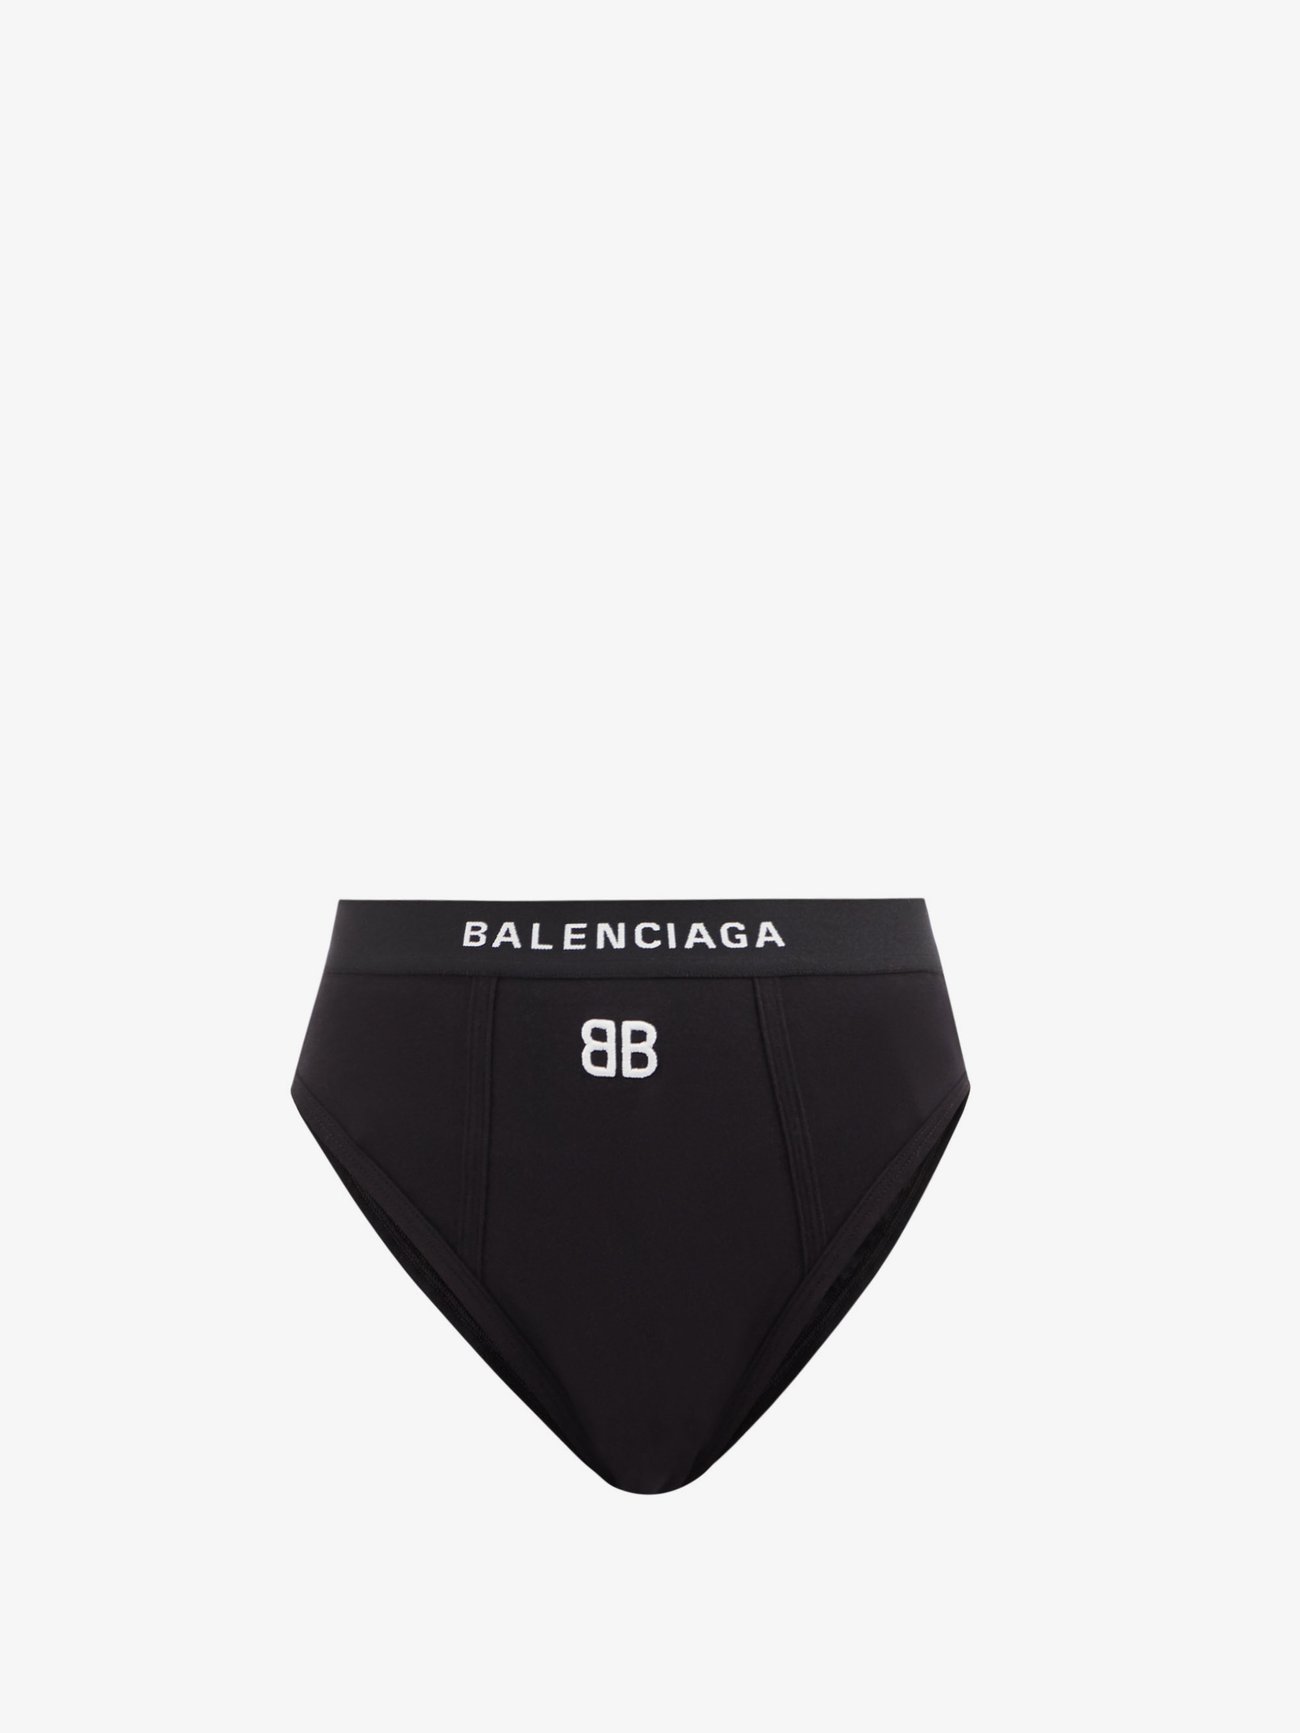 Buy Balenciaga women dark brown ribbed briefs with logo for $196 online on  SV77, 685521/3B4B6/2500